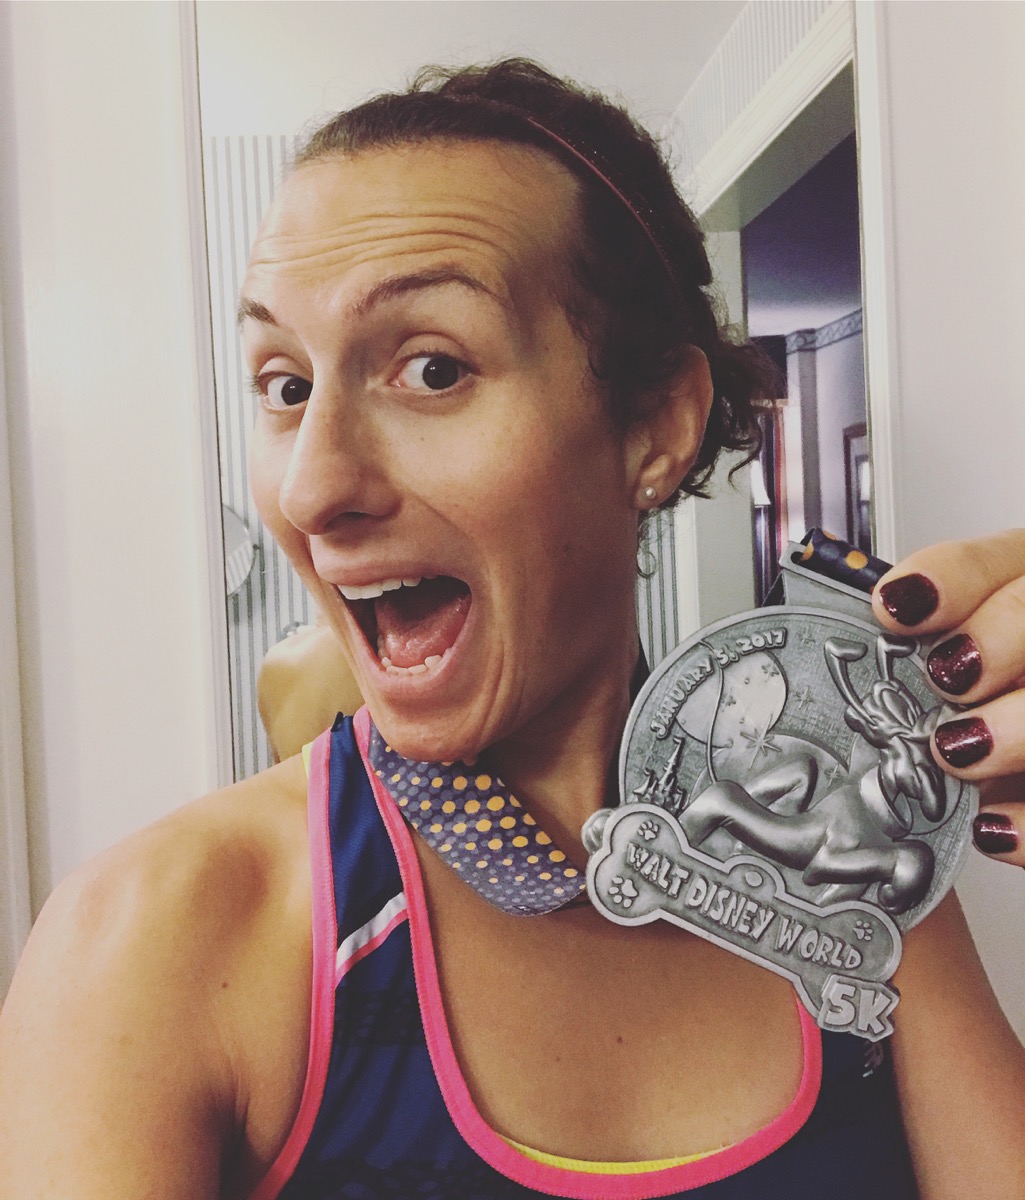 2017 Walt Disney World Marathon 5k medal